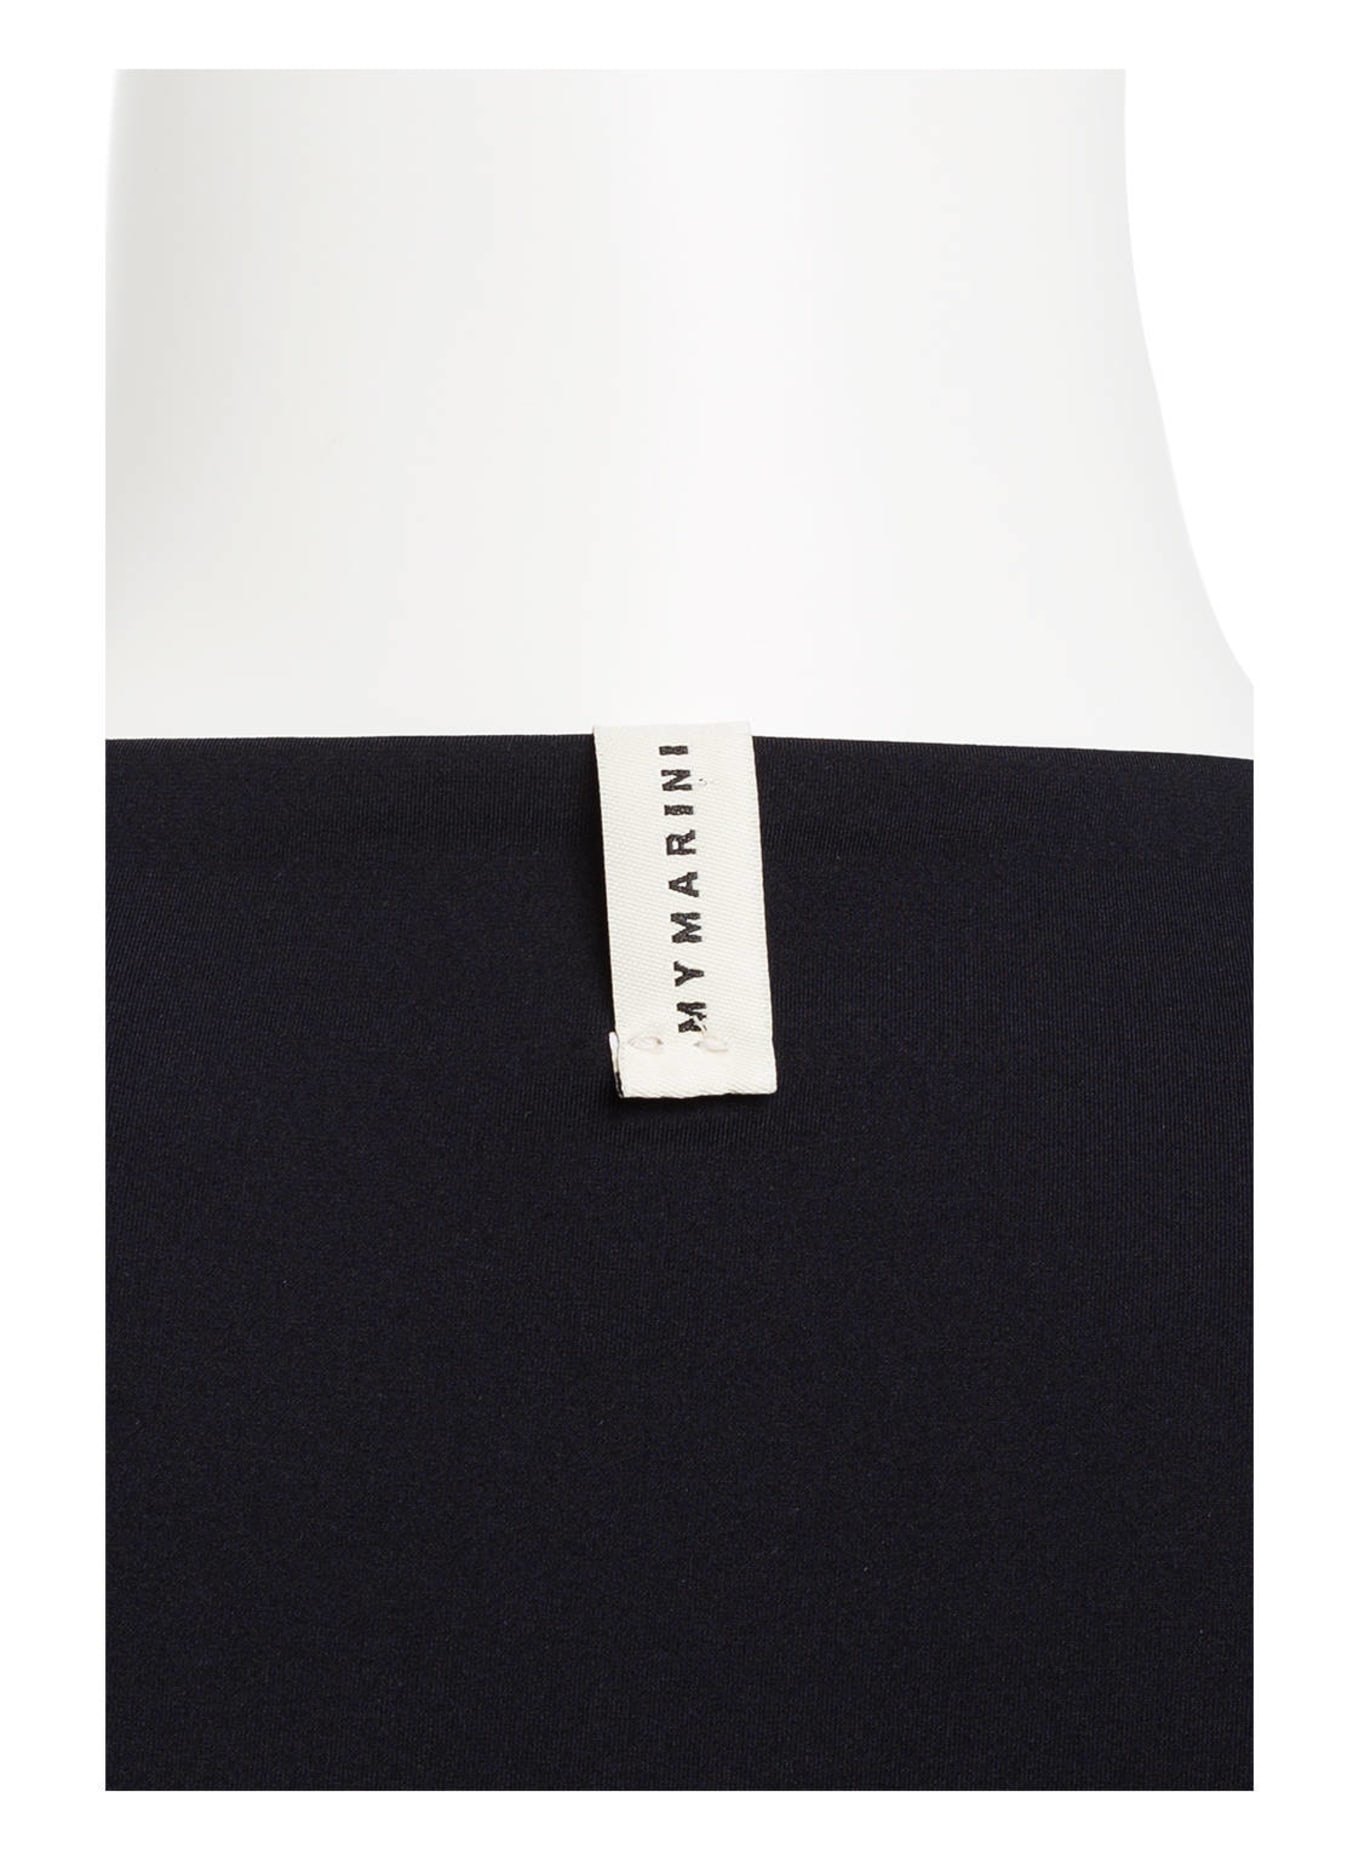 MYMARINI Bralette bikini top LADY reversible , Color: BLACK/ DARK GRAY/ CREAM (Image 5)